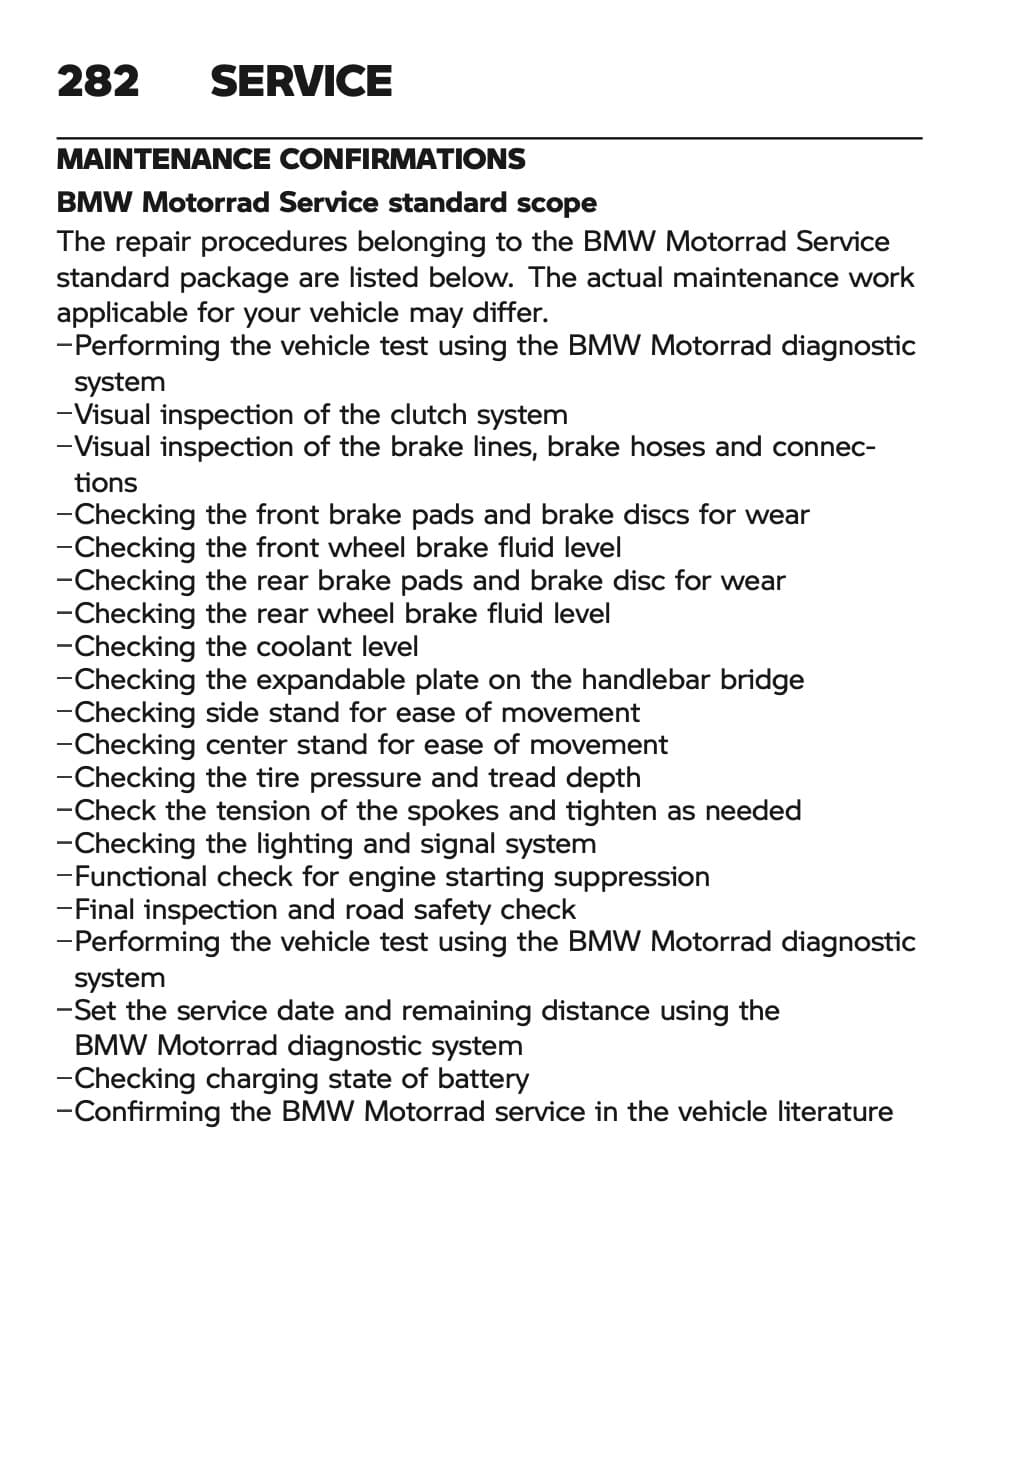 2024 BMW R 1300 GS owner's manual maintenance schedule screenshot 2